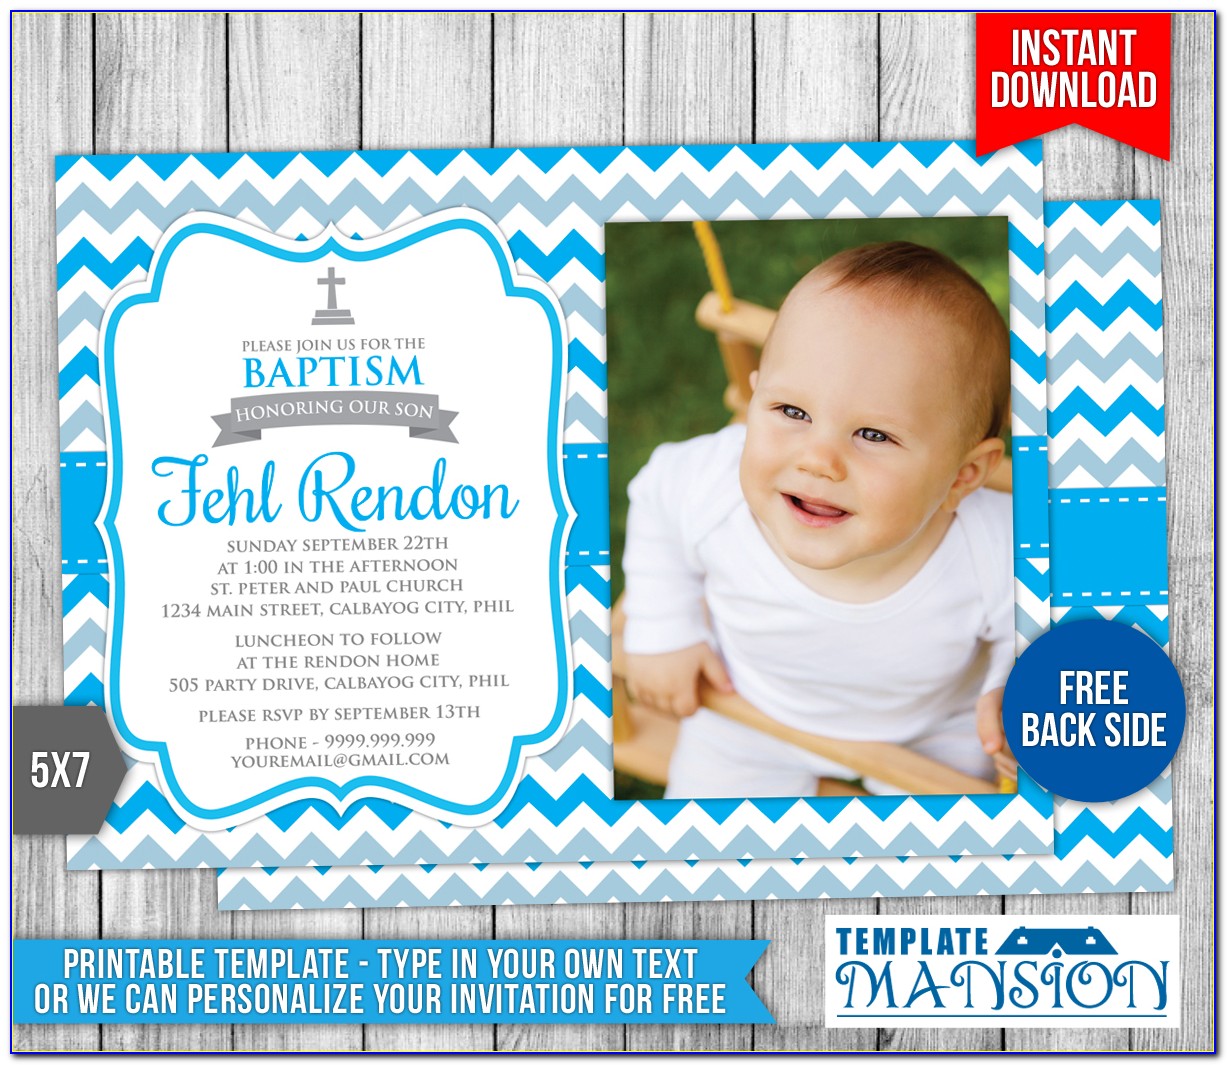 Baptism Invitation Design For Baby Boy